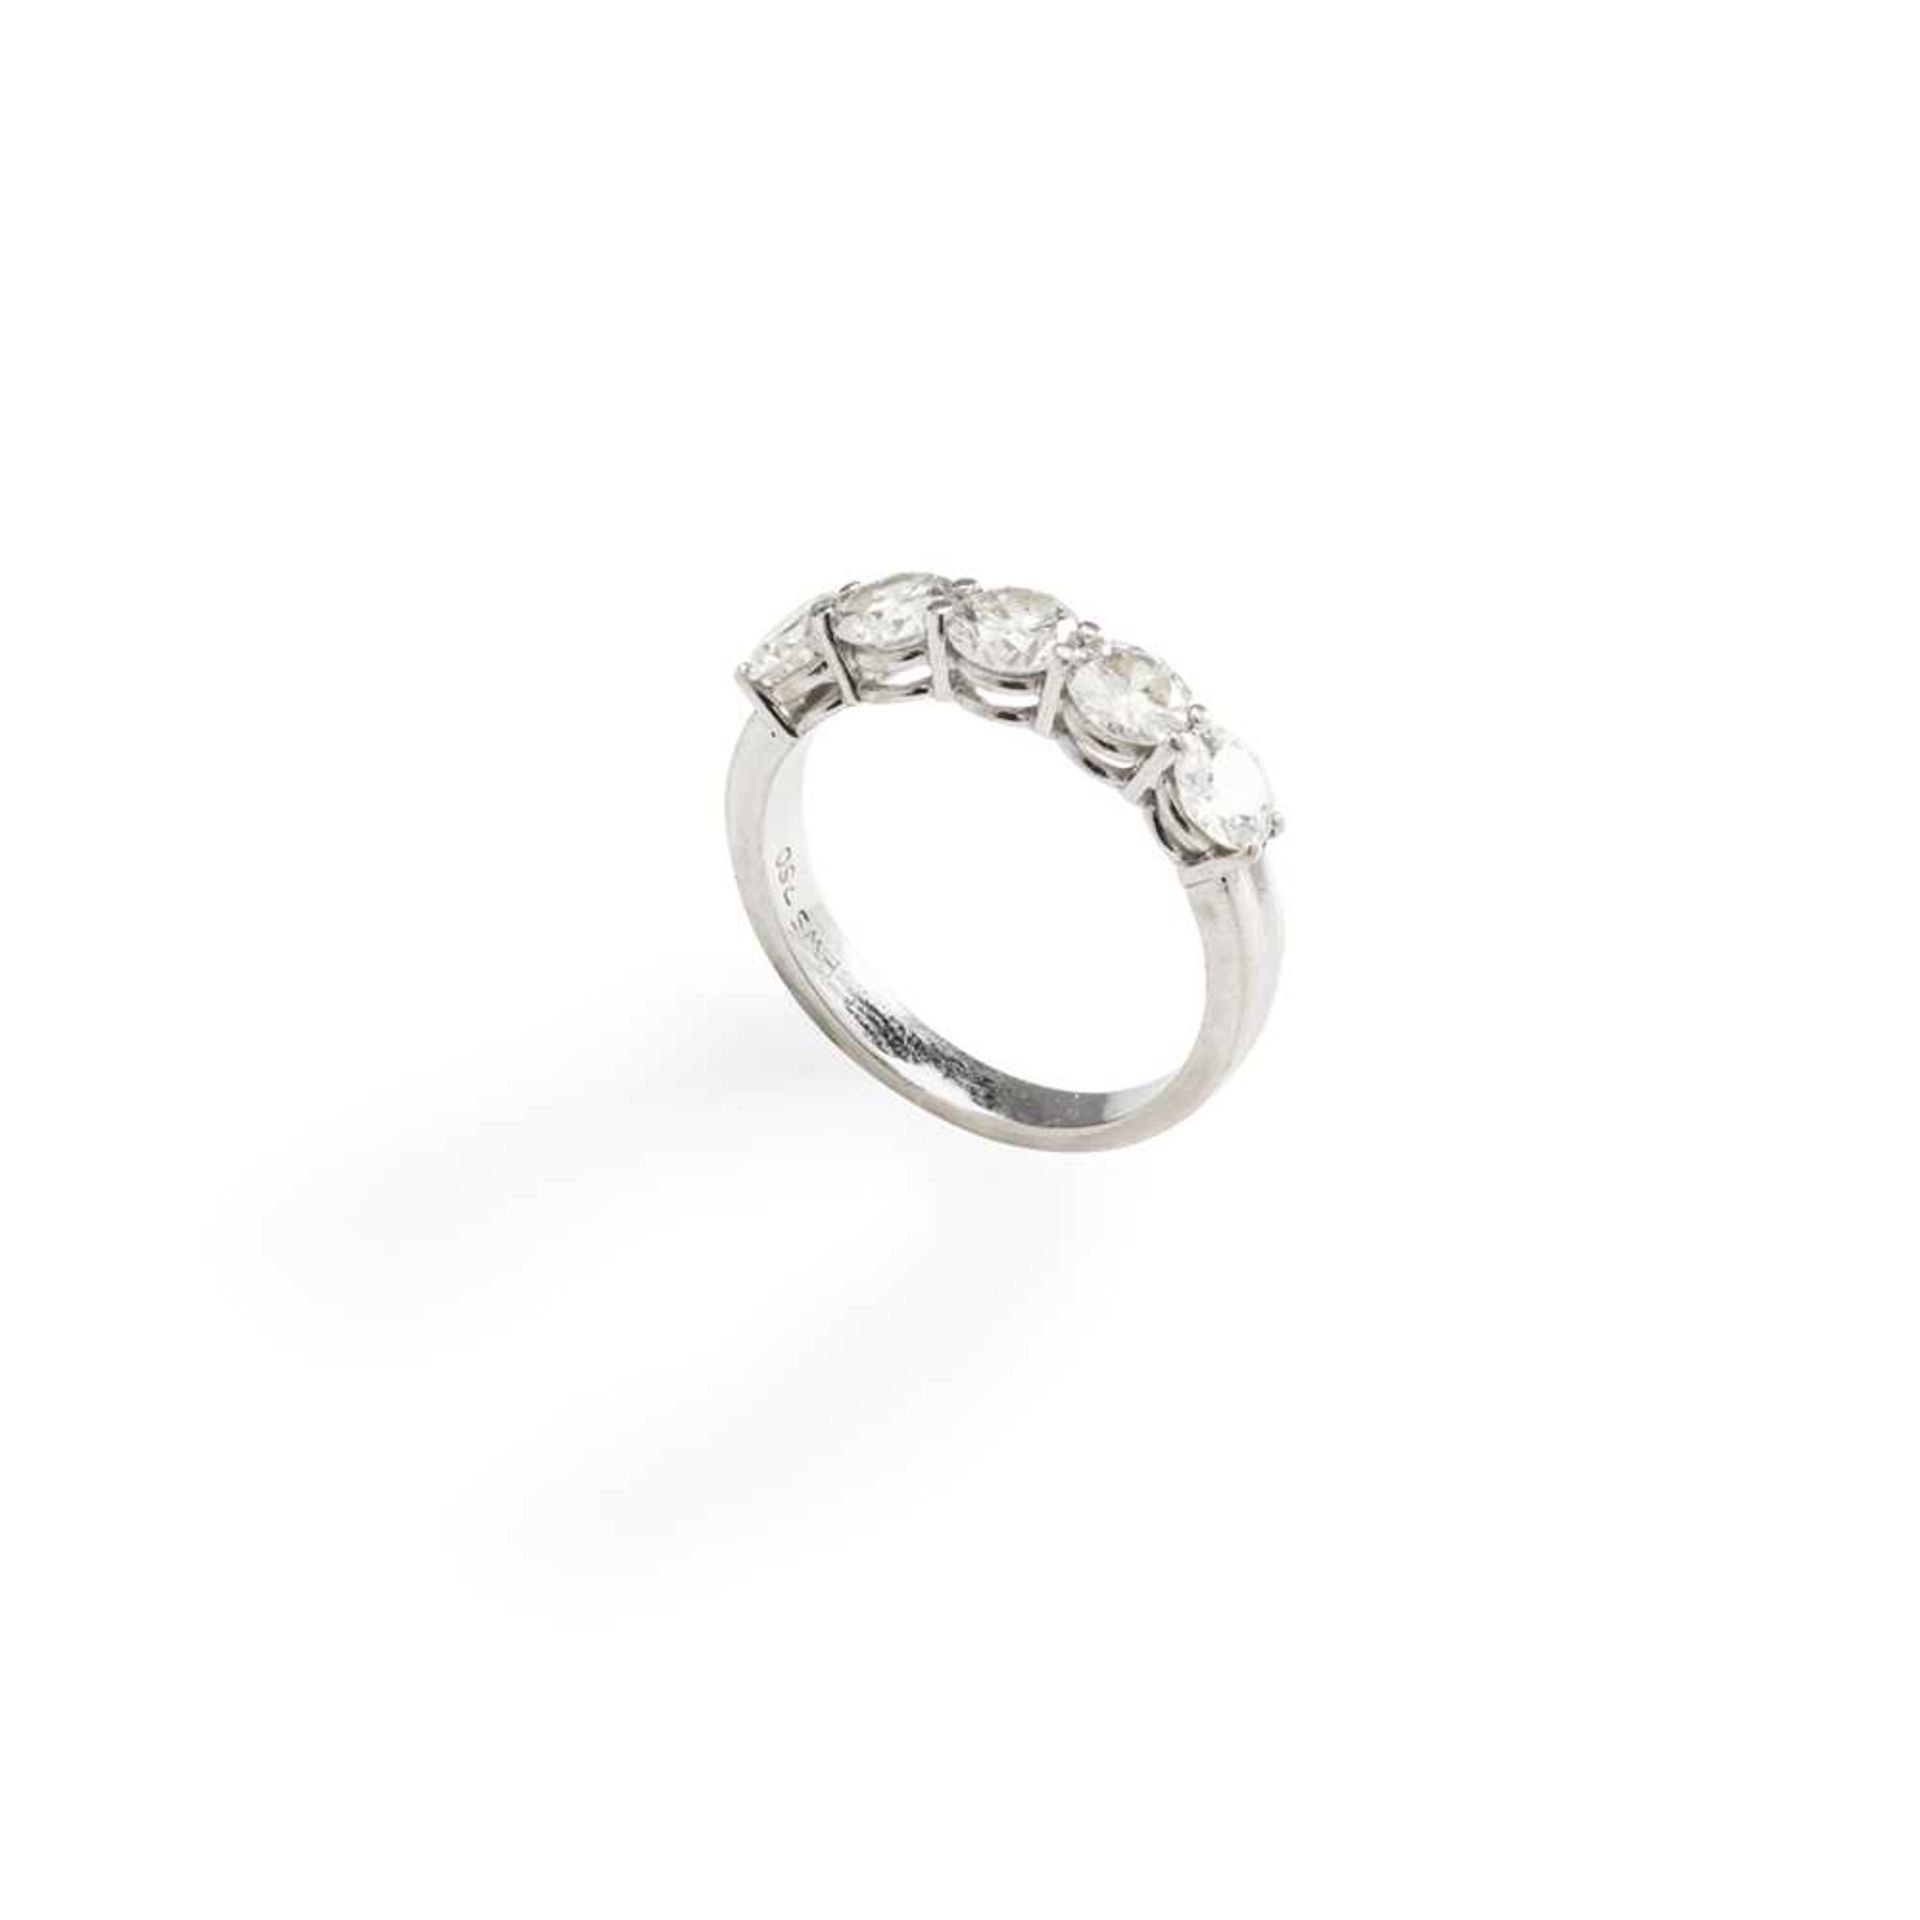 A five-stone diamond ring